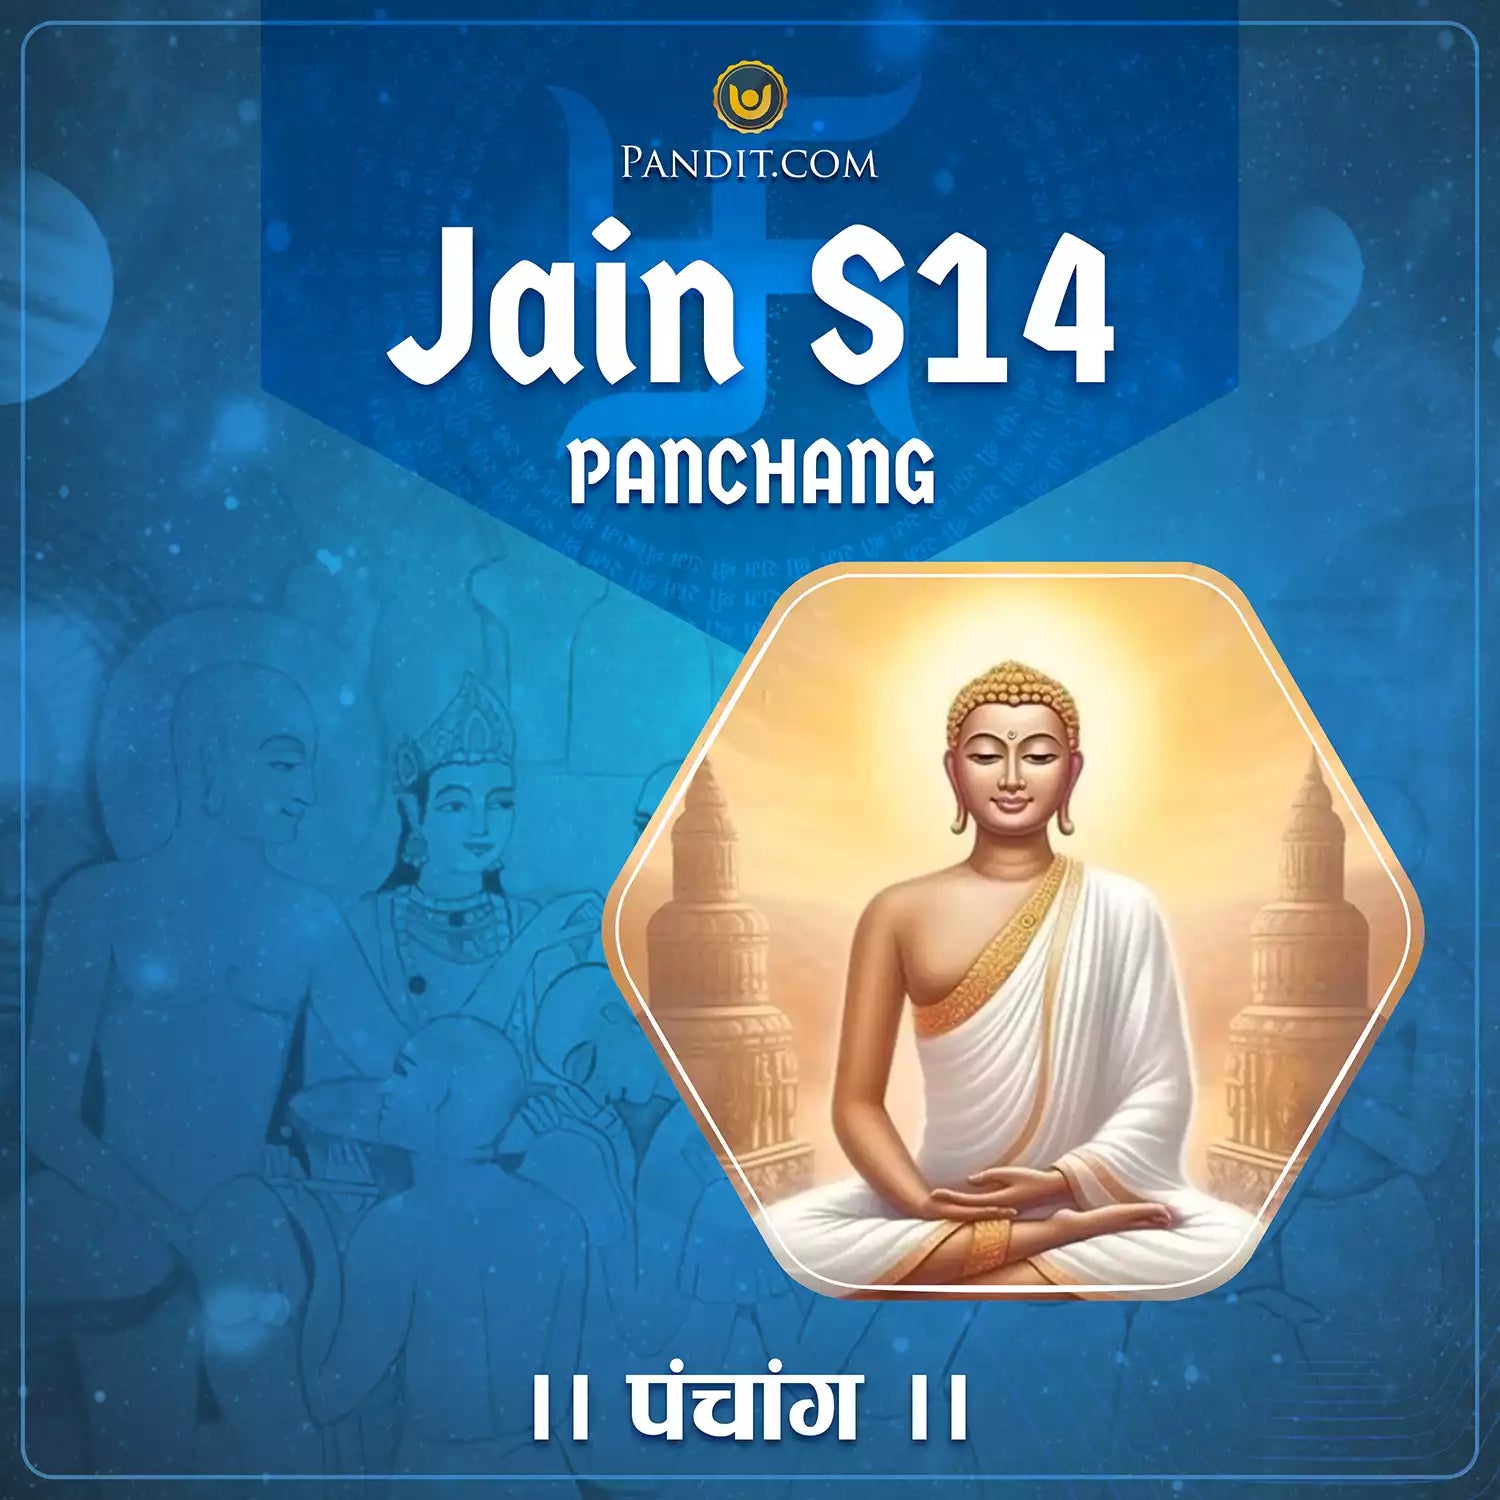 Jain S14